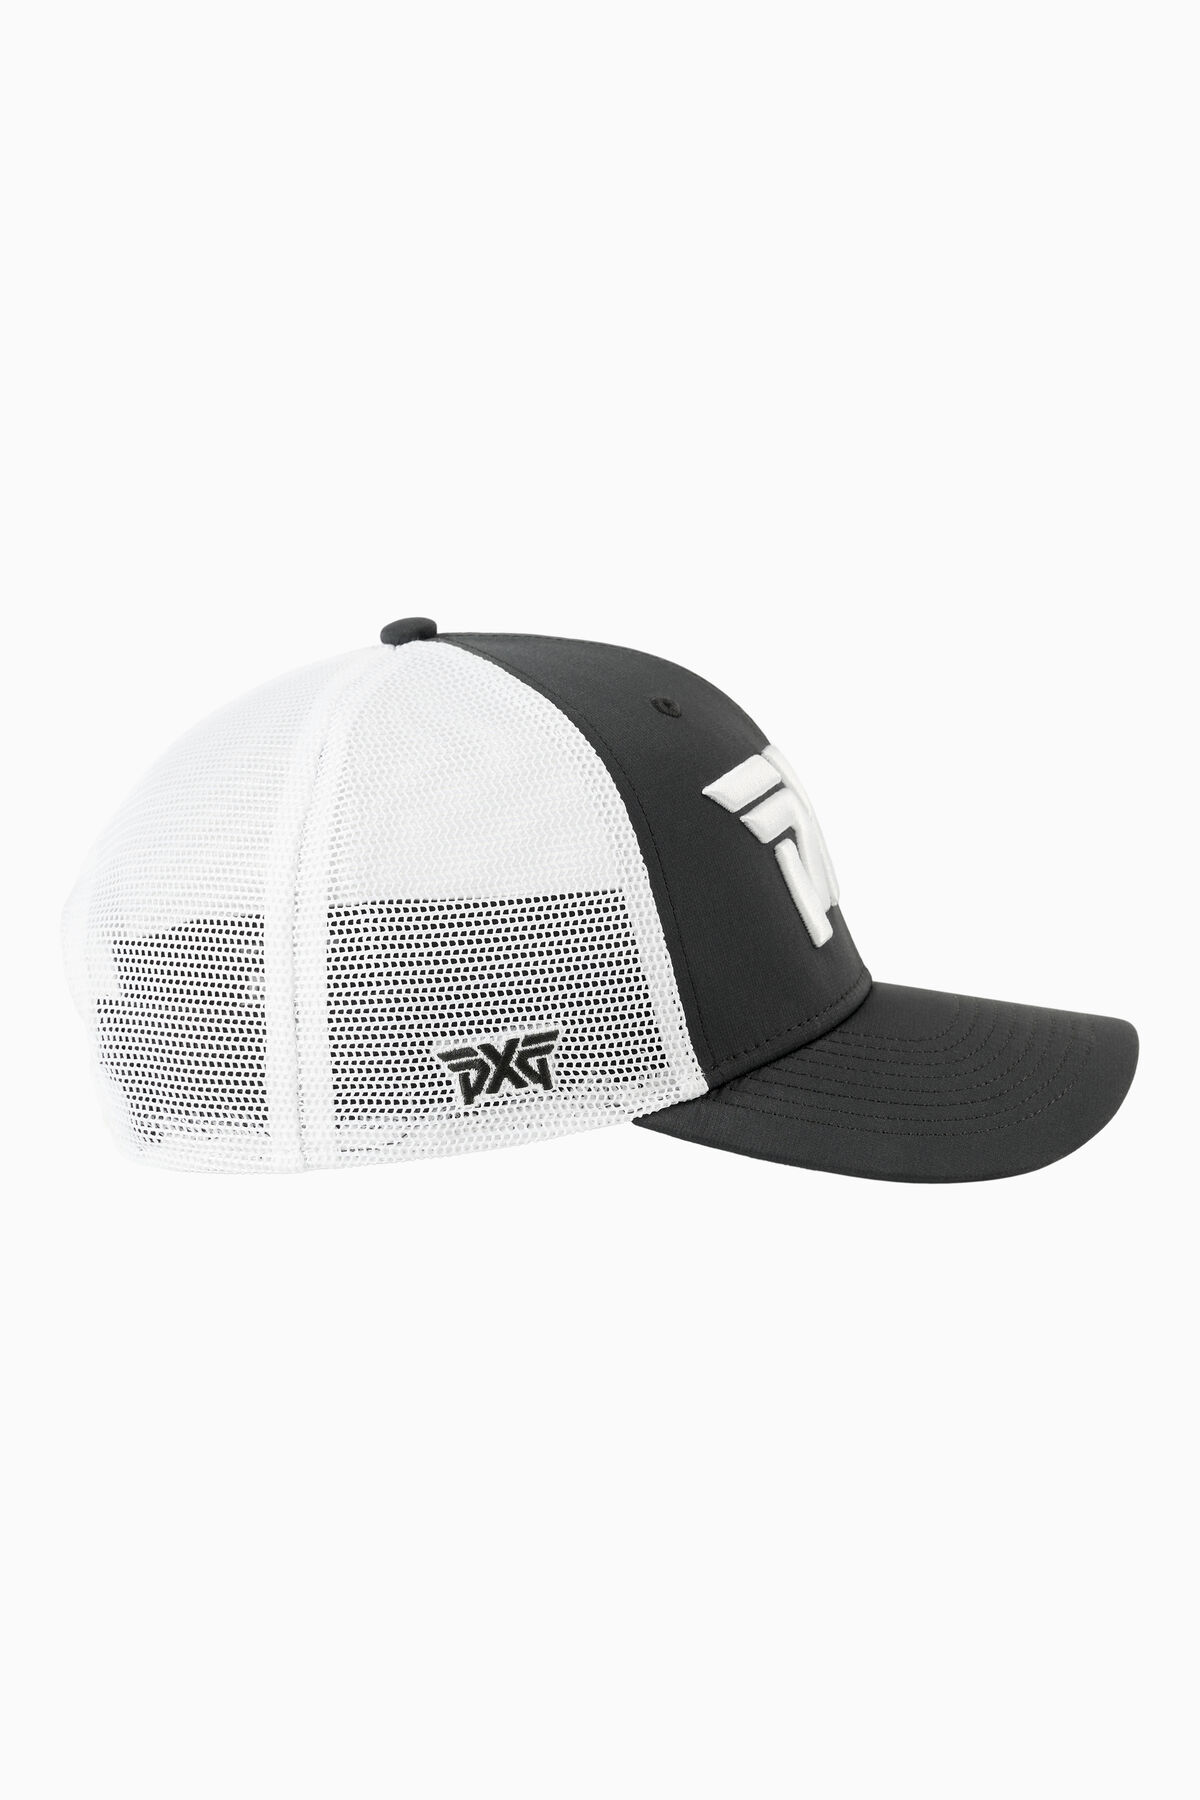 PXG x Darius Rucker Trucker Hat - Black - One Size Black